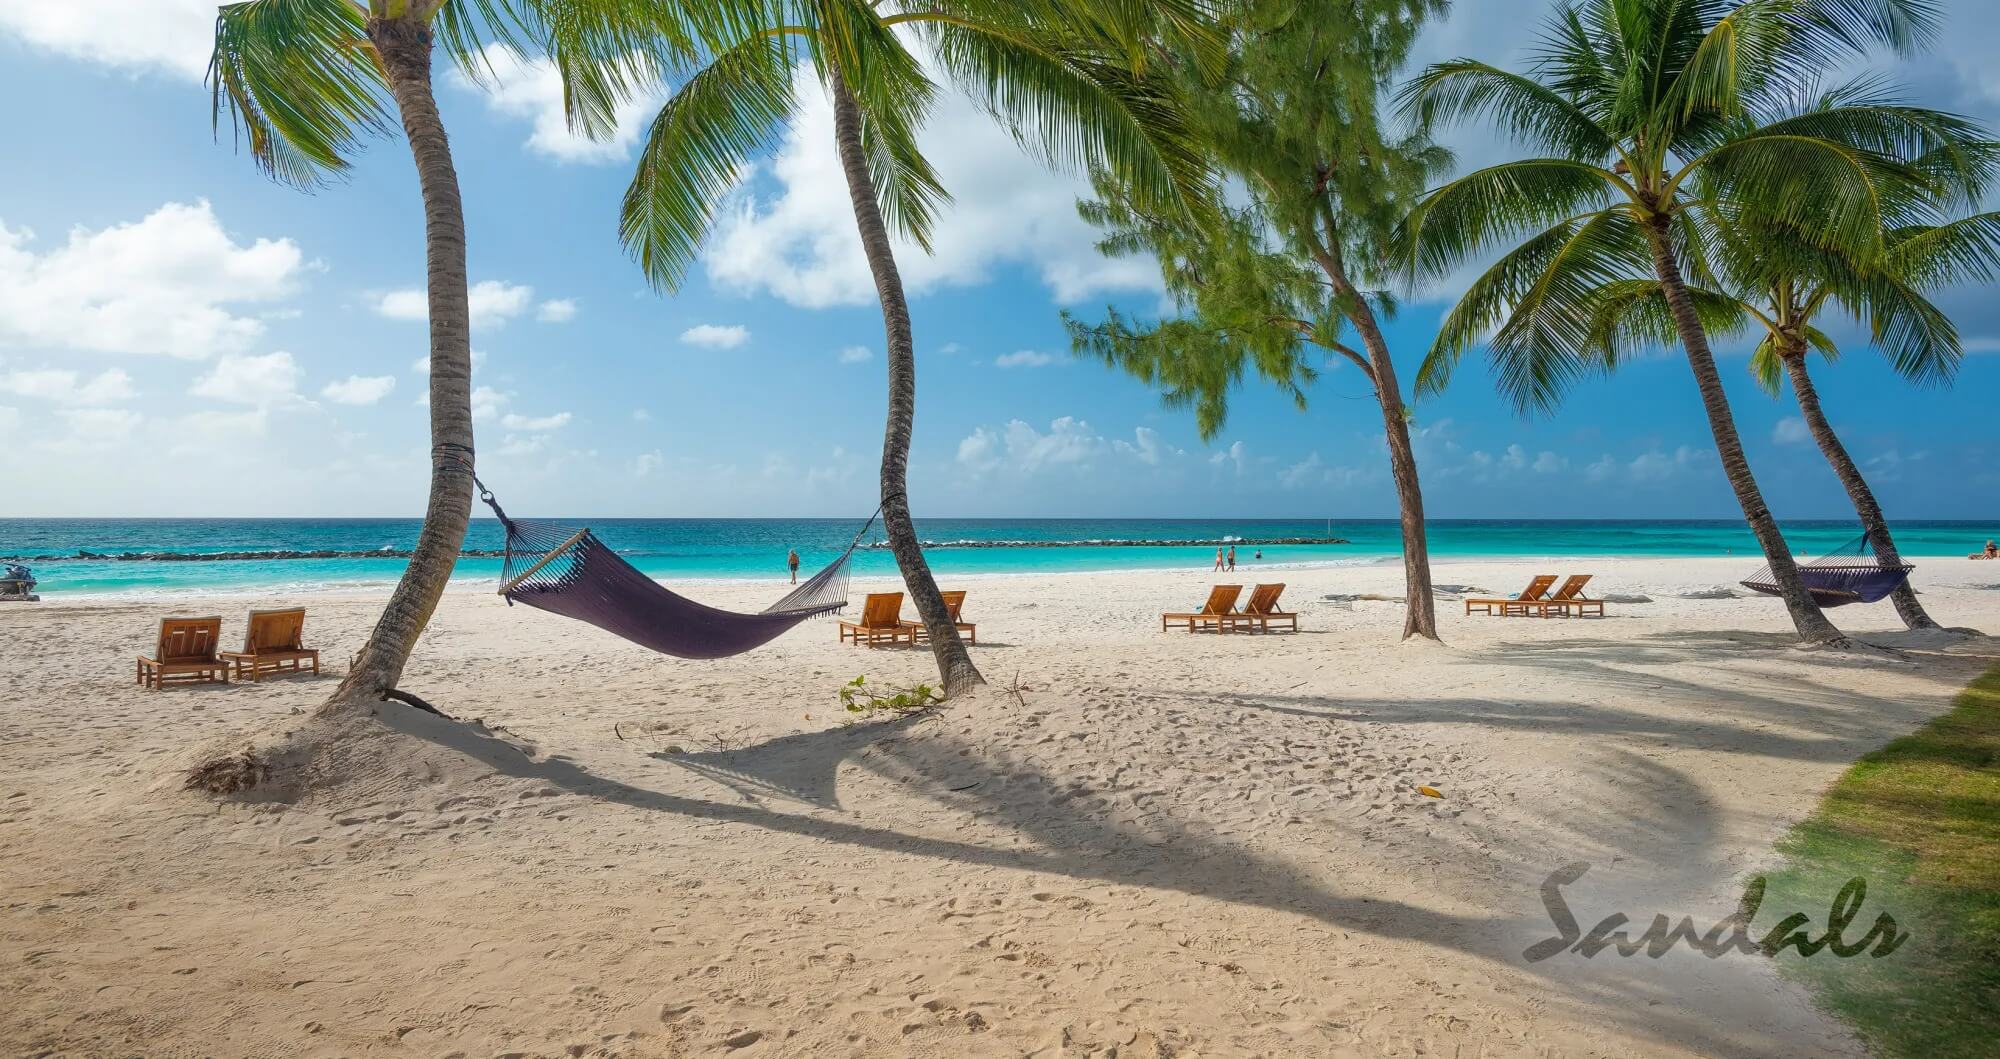 Sandals Royal Barbados Resort *****